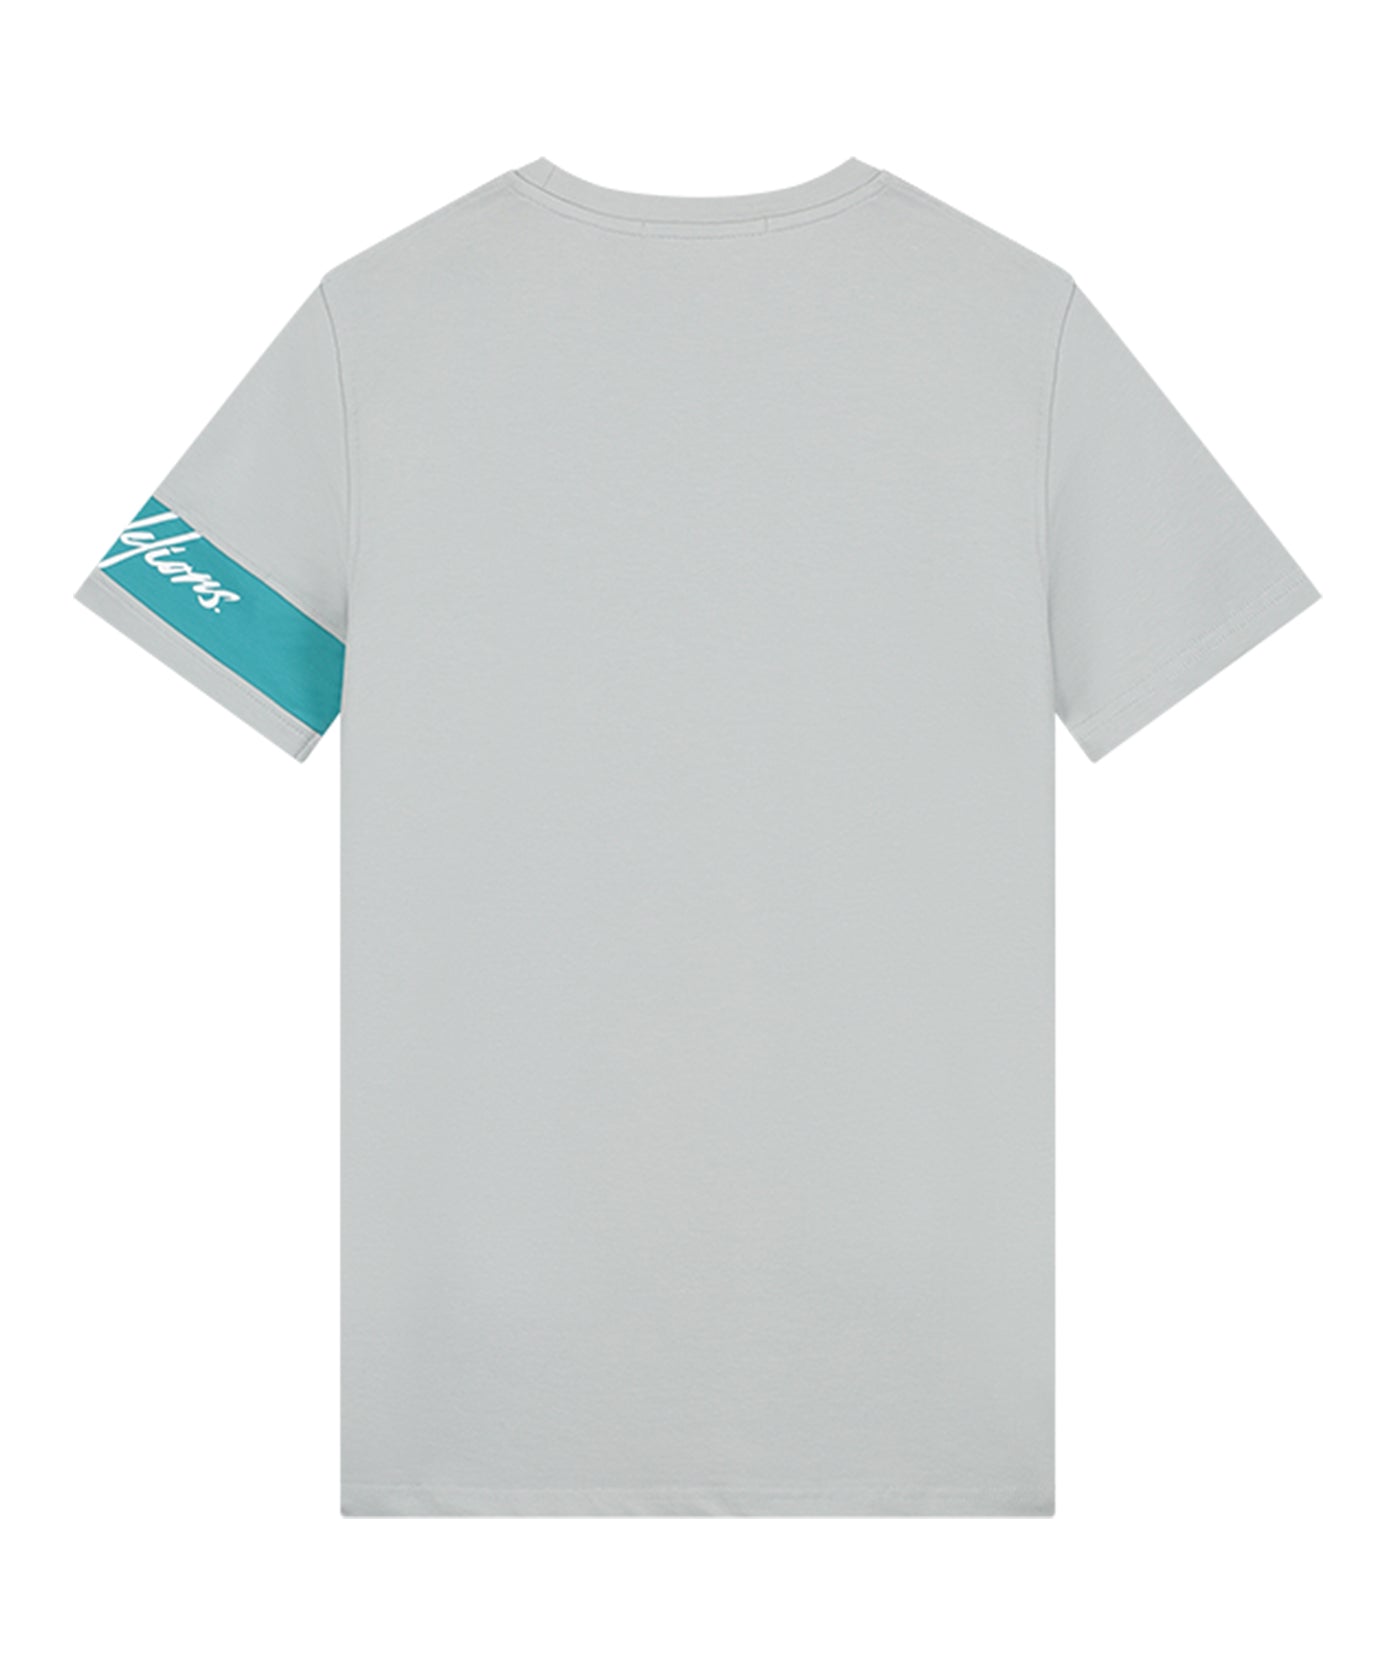 Malelions - Captain - T-shirt - Grey/aqua Blue